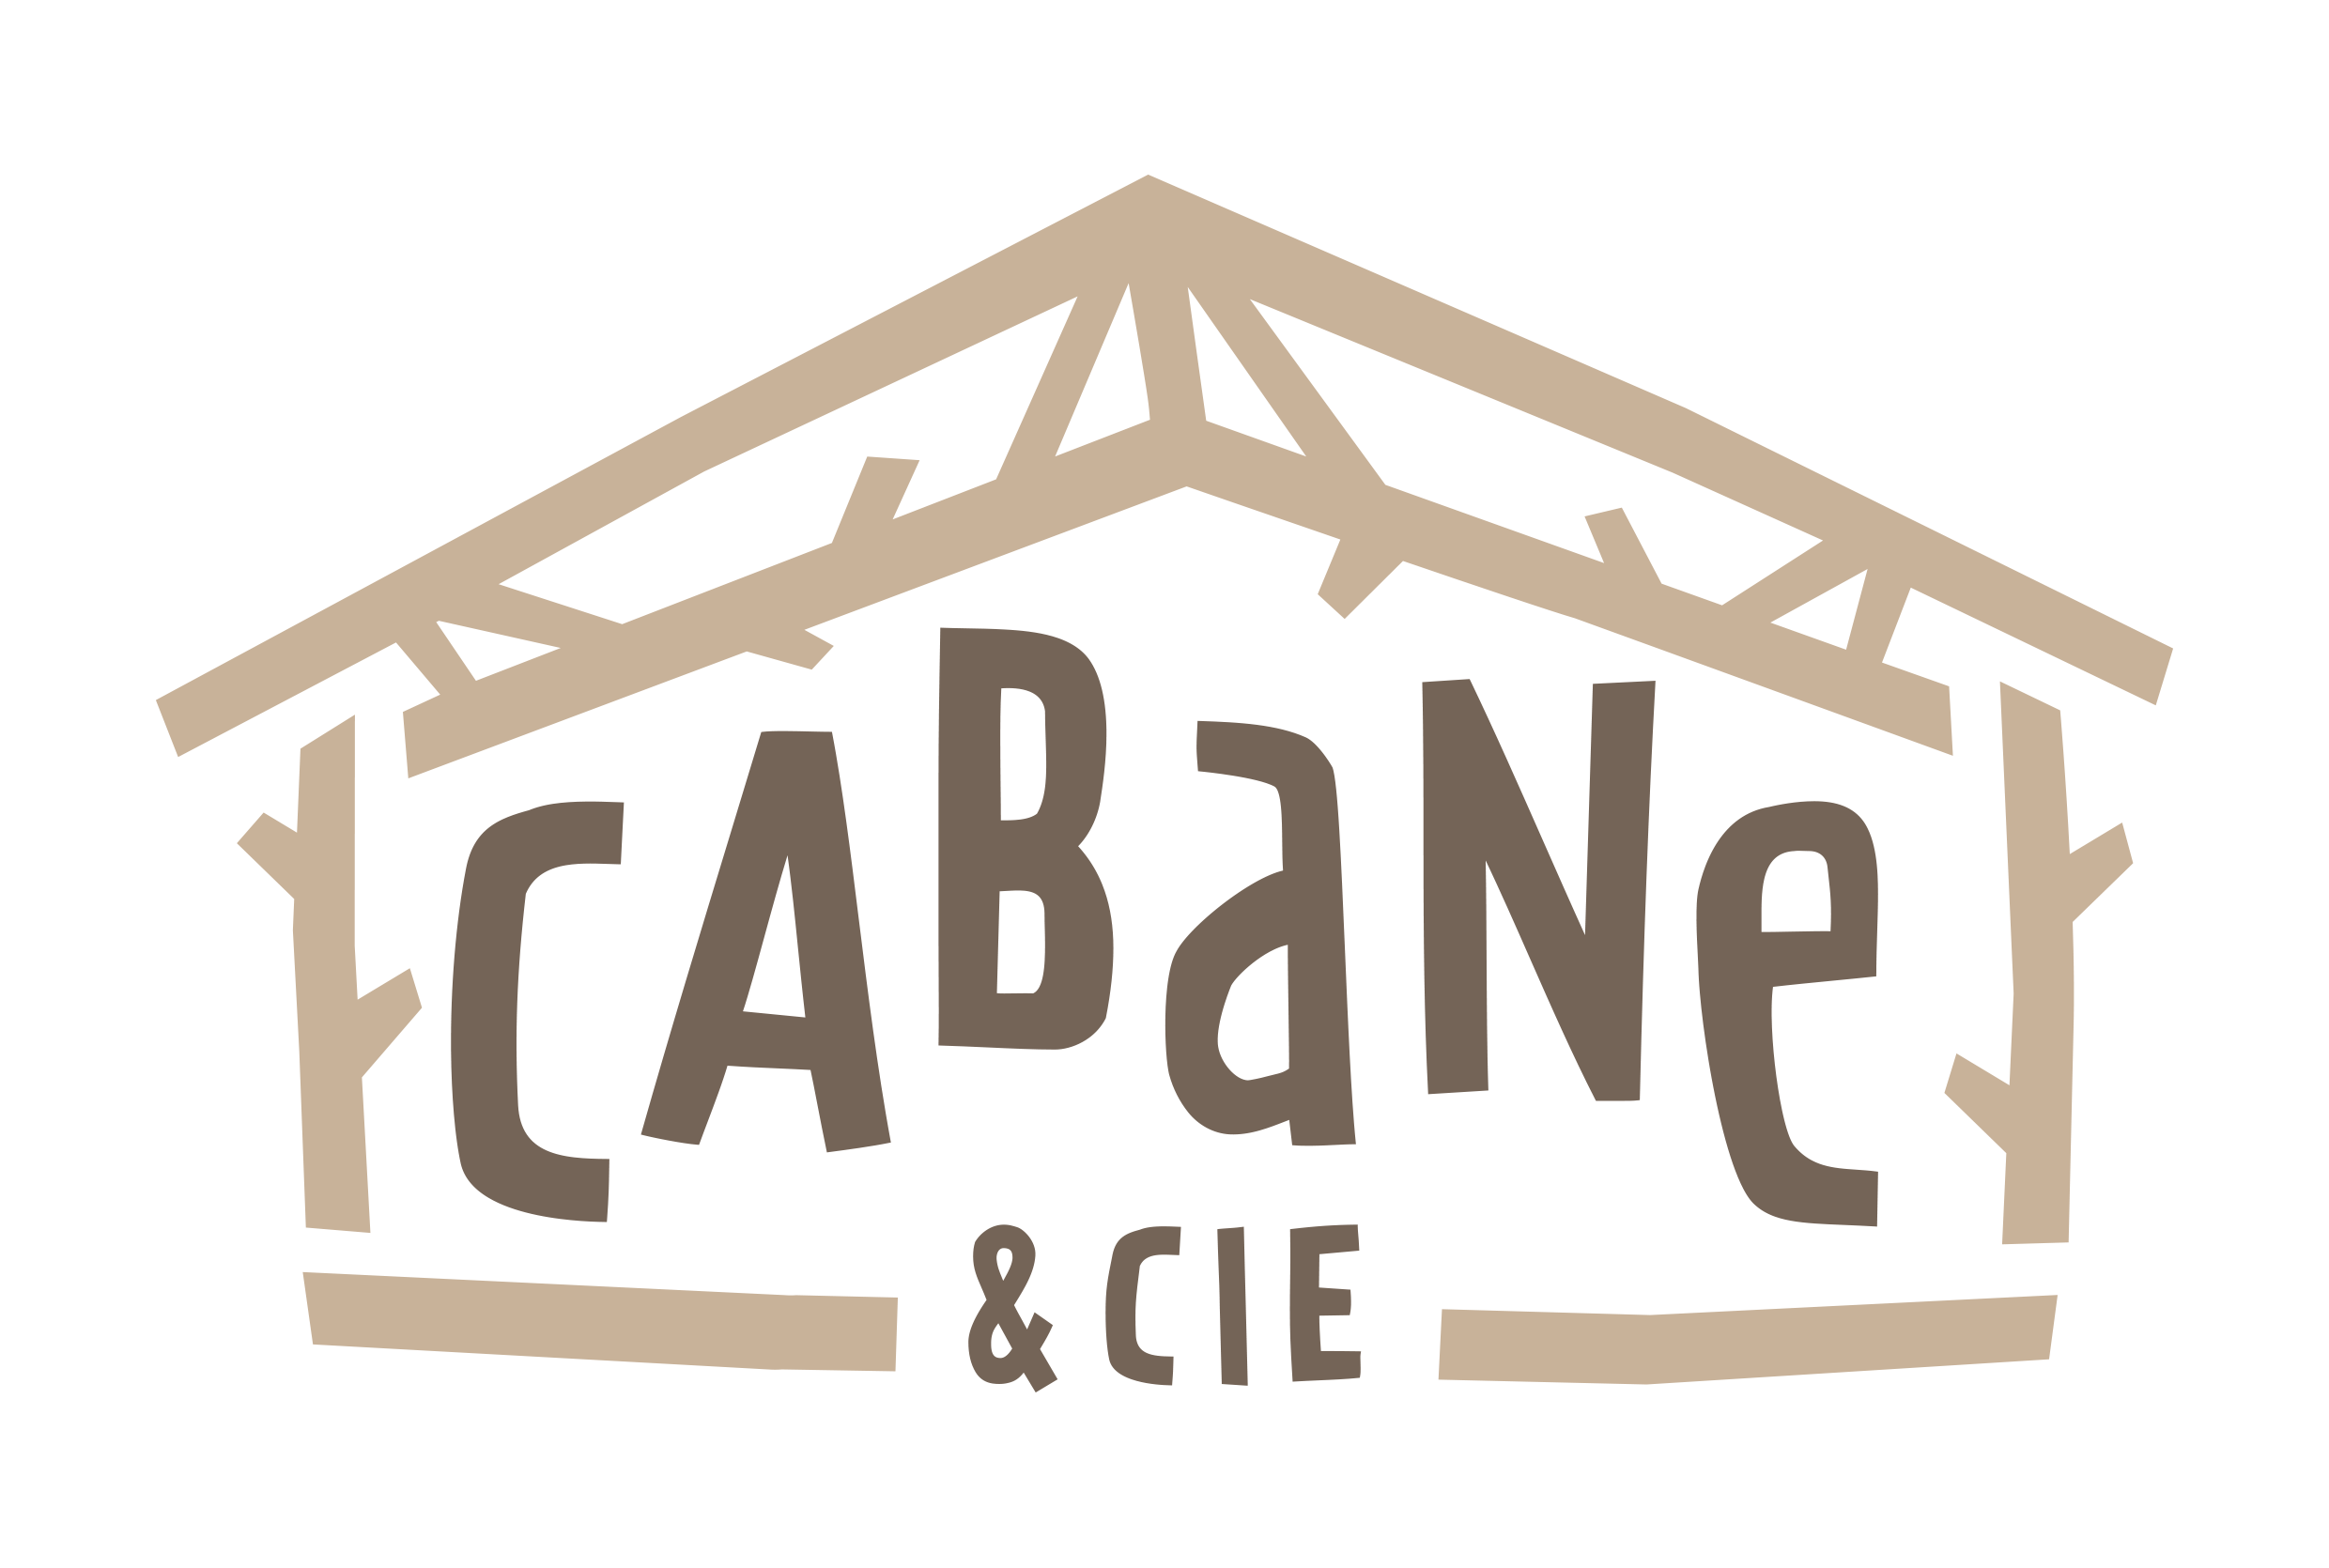 Cabane & Cie logo simple